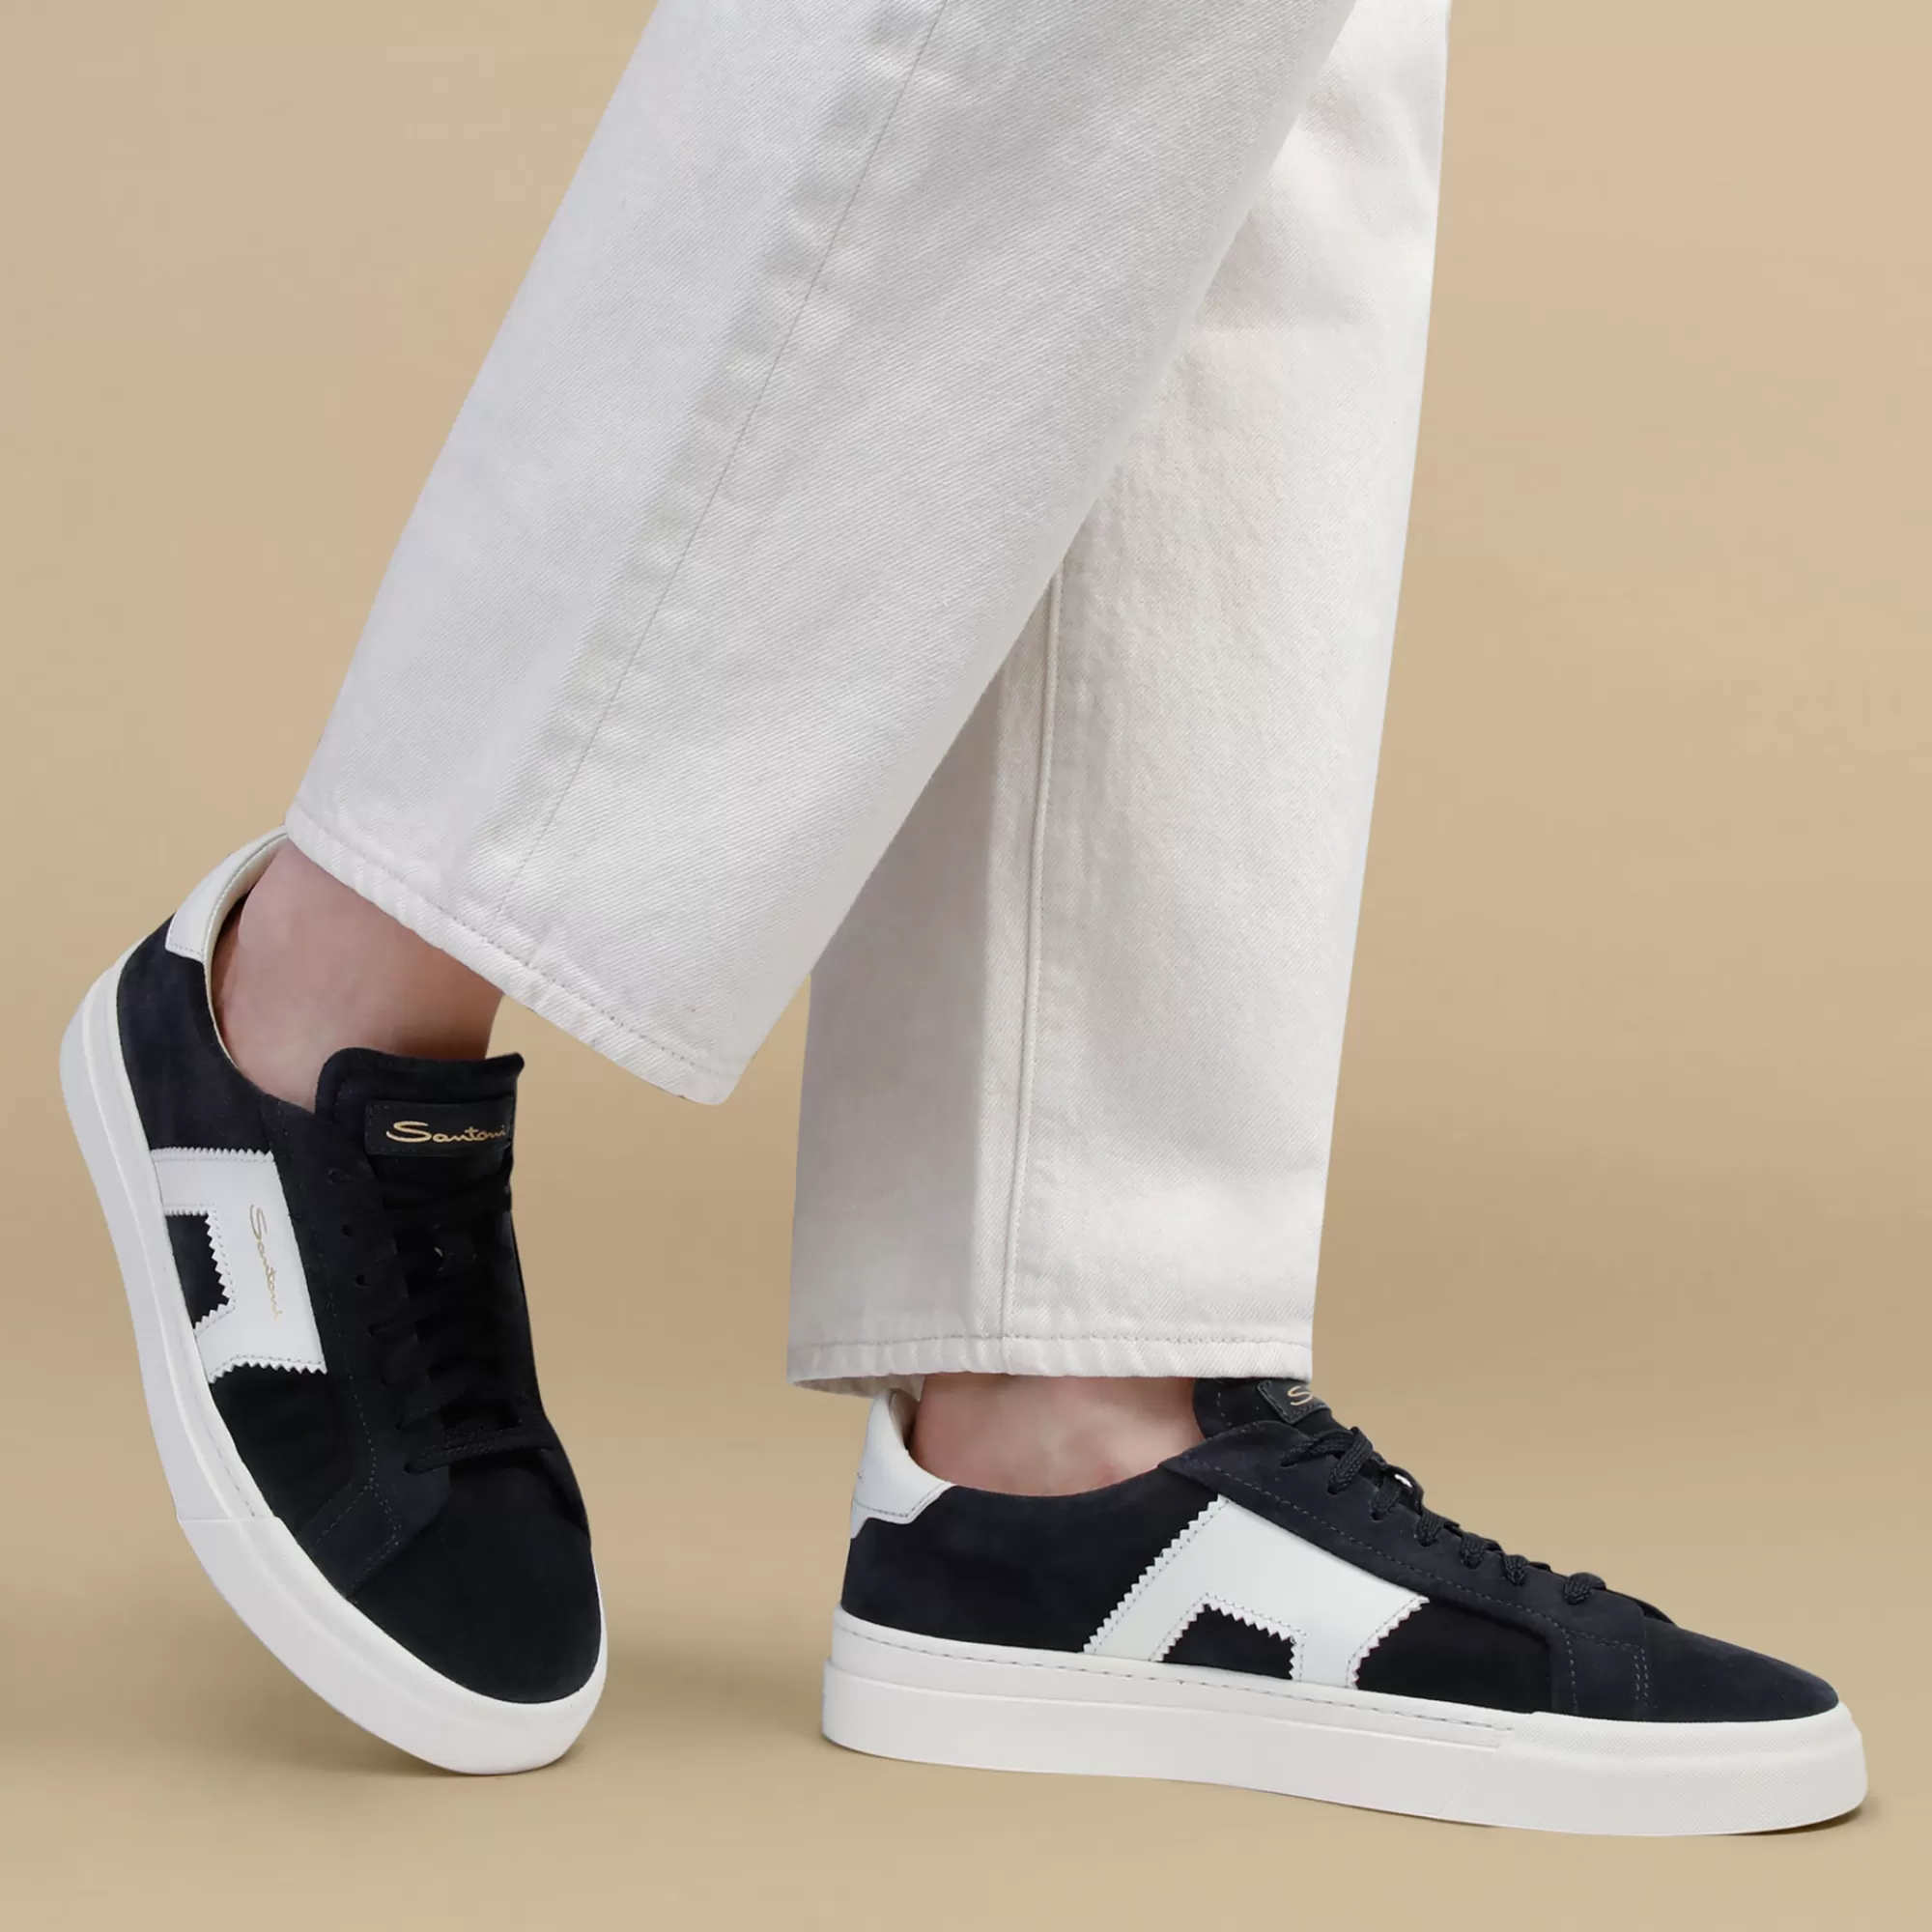 Shop Double buckle sneaker da uomo in suede e pelle blu e bianca Vedi tutte le calzature | Sneakers